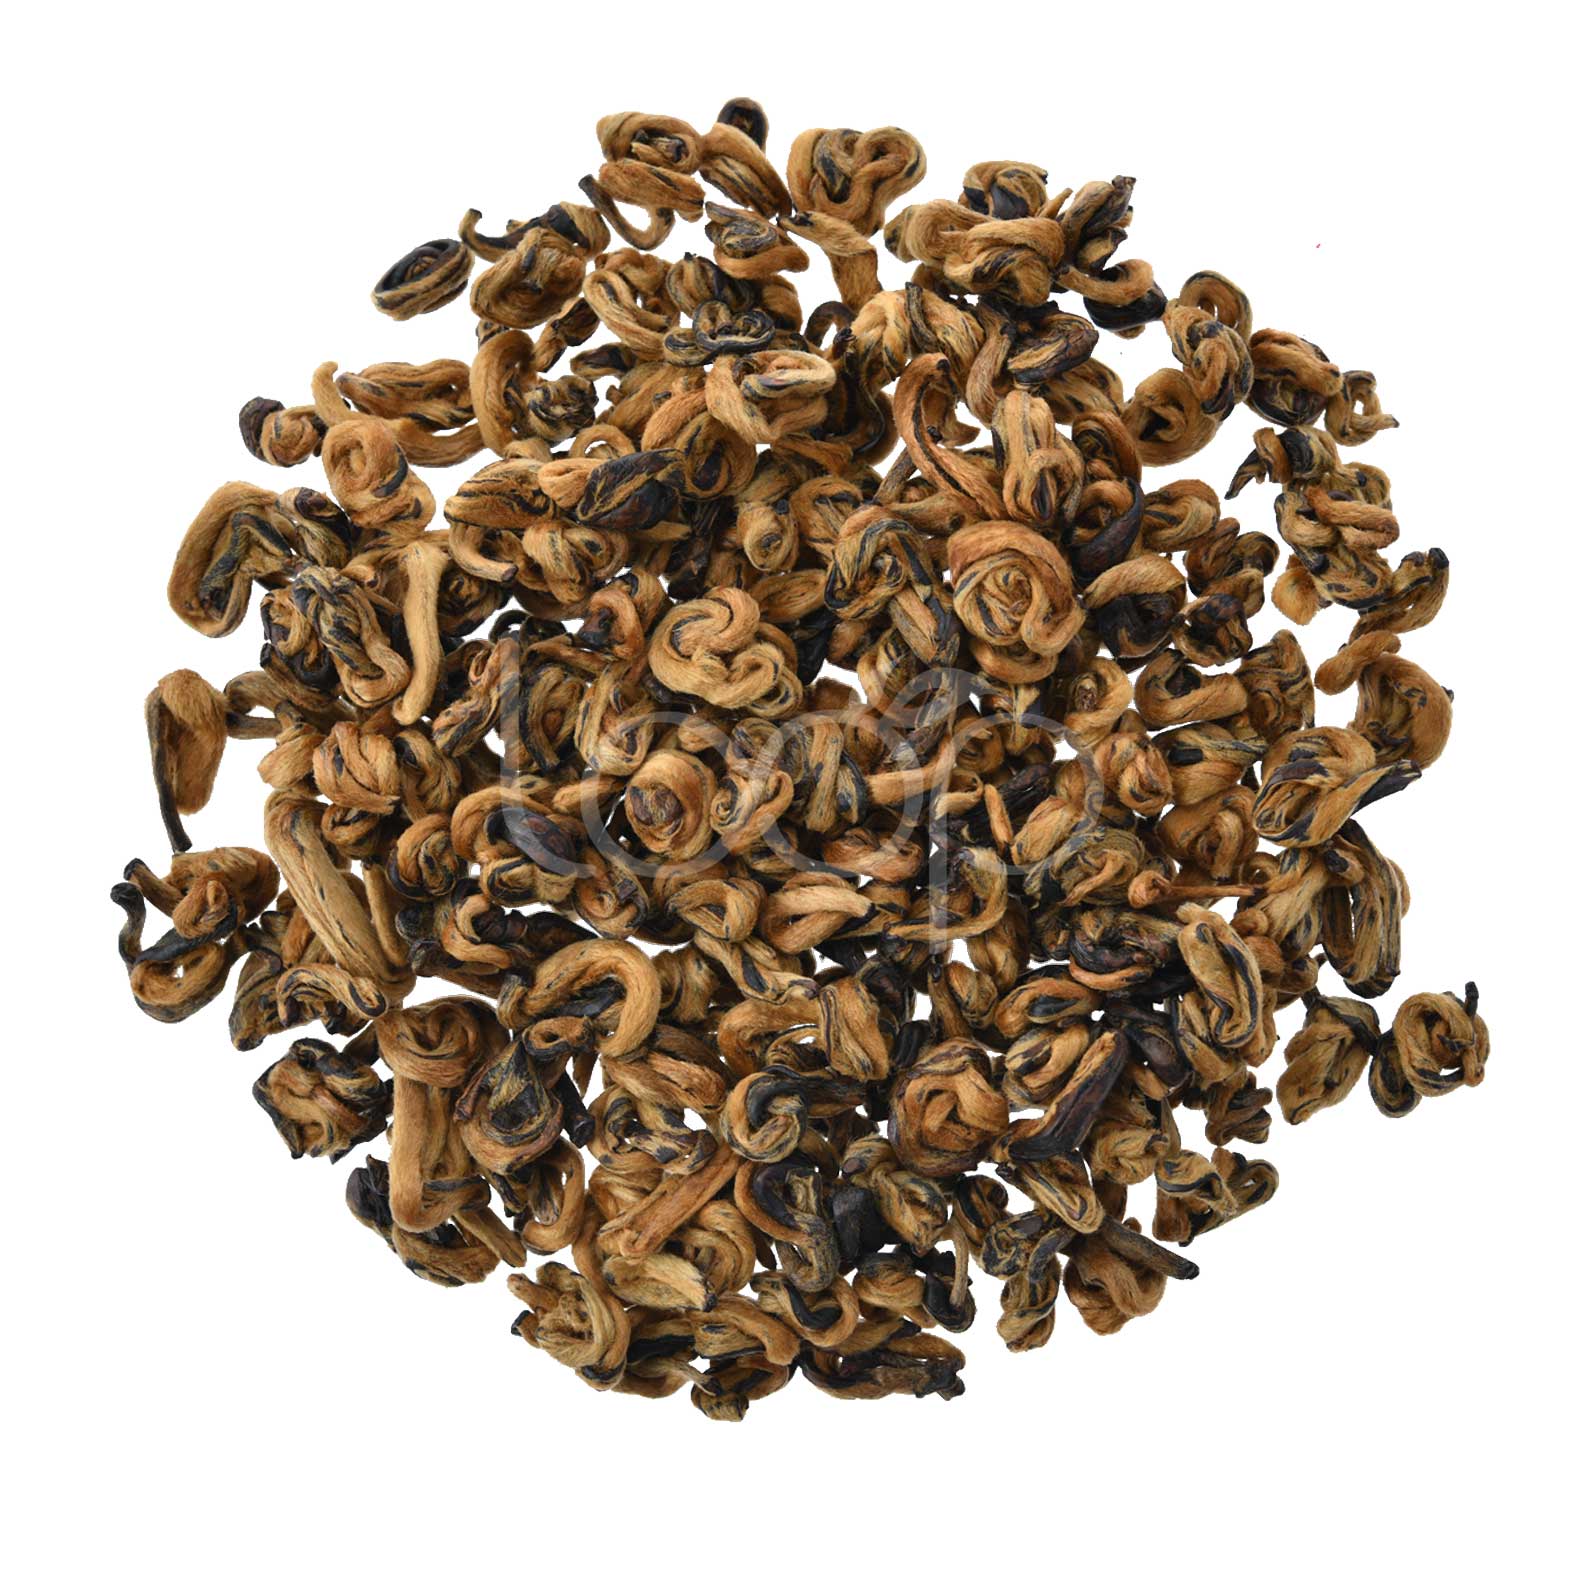 China wholesale Tractor Certified Organic Black Tea - Golden Spiral Tea China Black Tea #1 – Goodtea